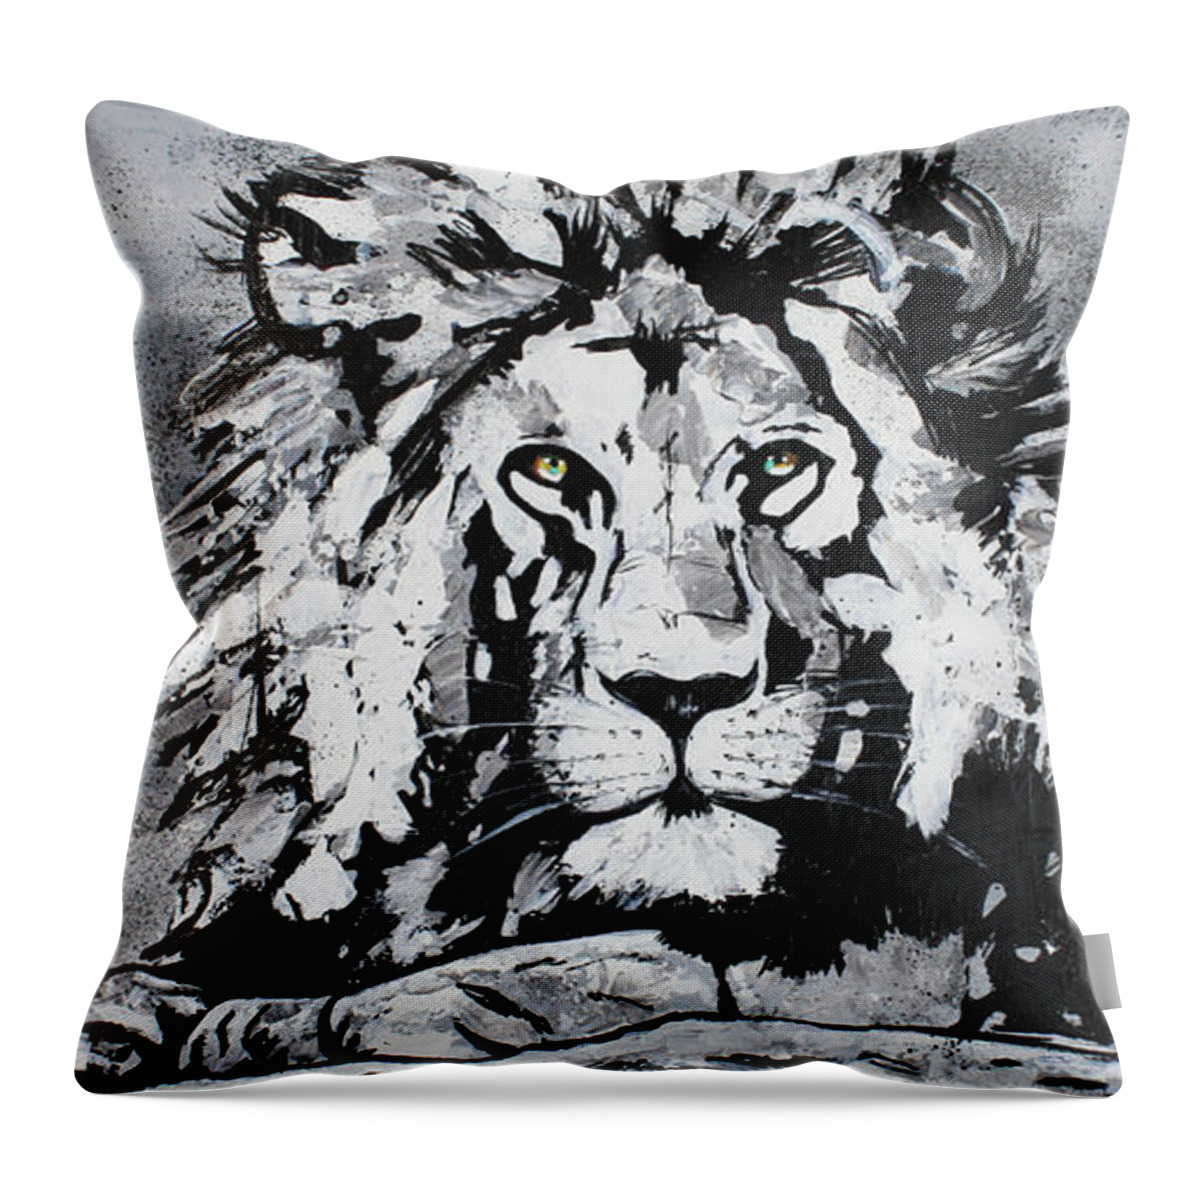 Dwayne Johnson Throw Pillows for Sale - Fine Art America